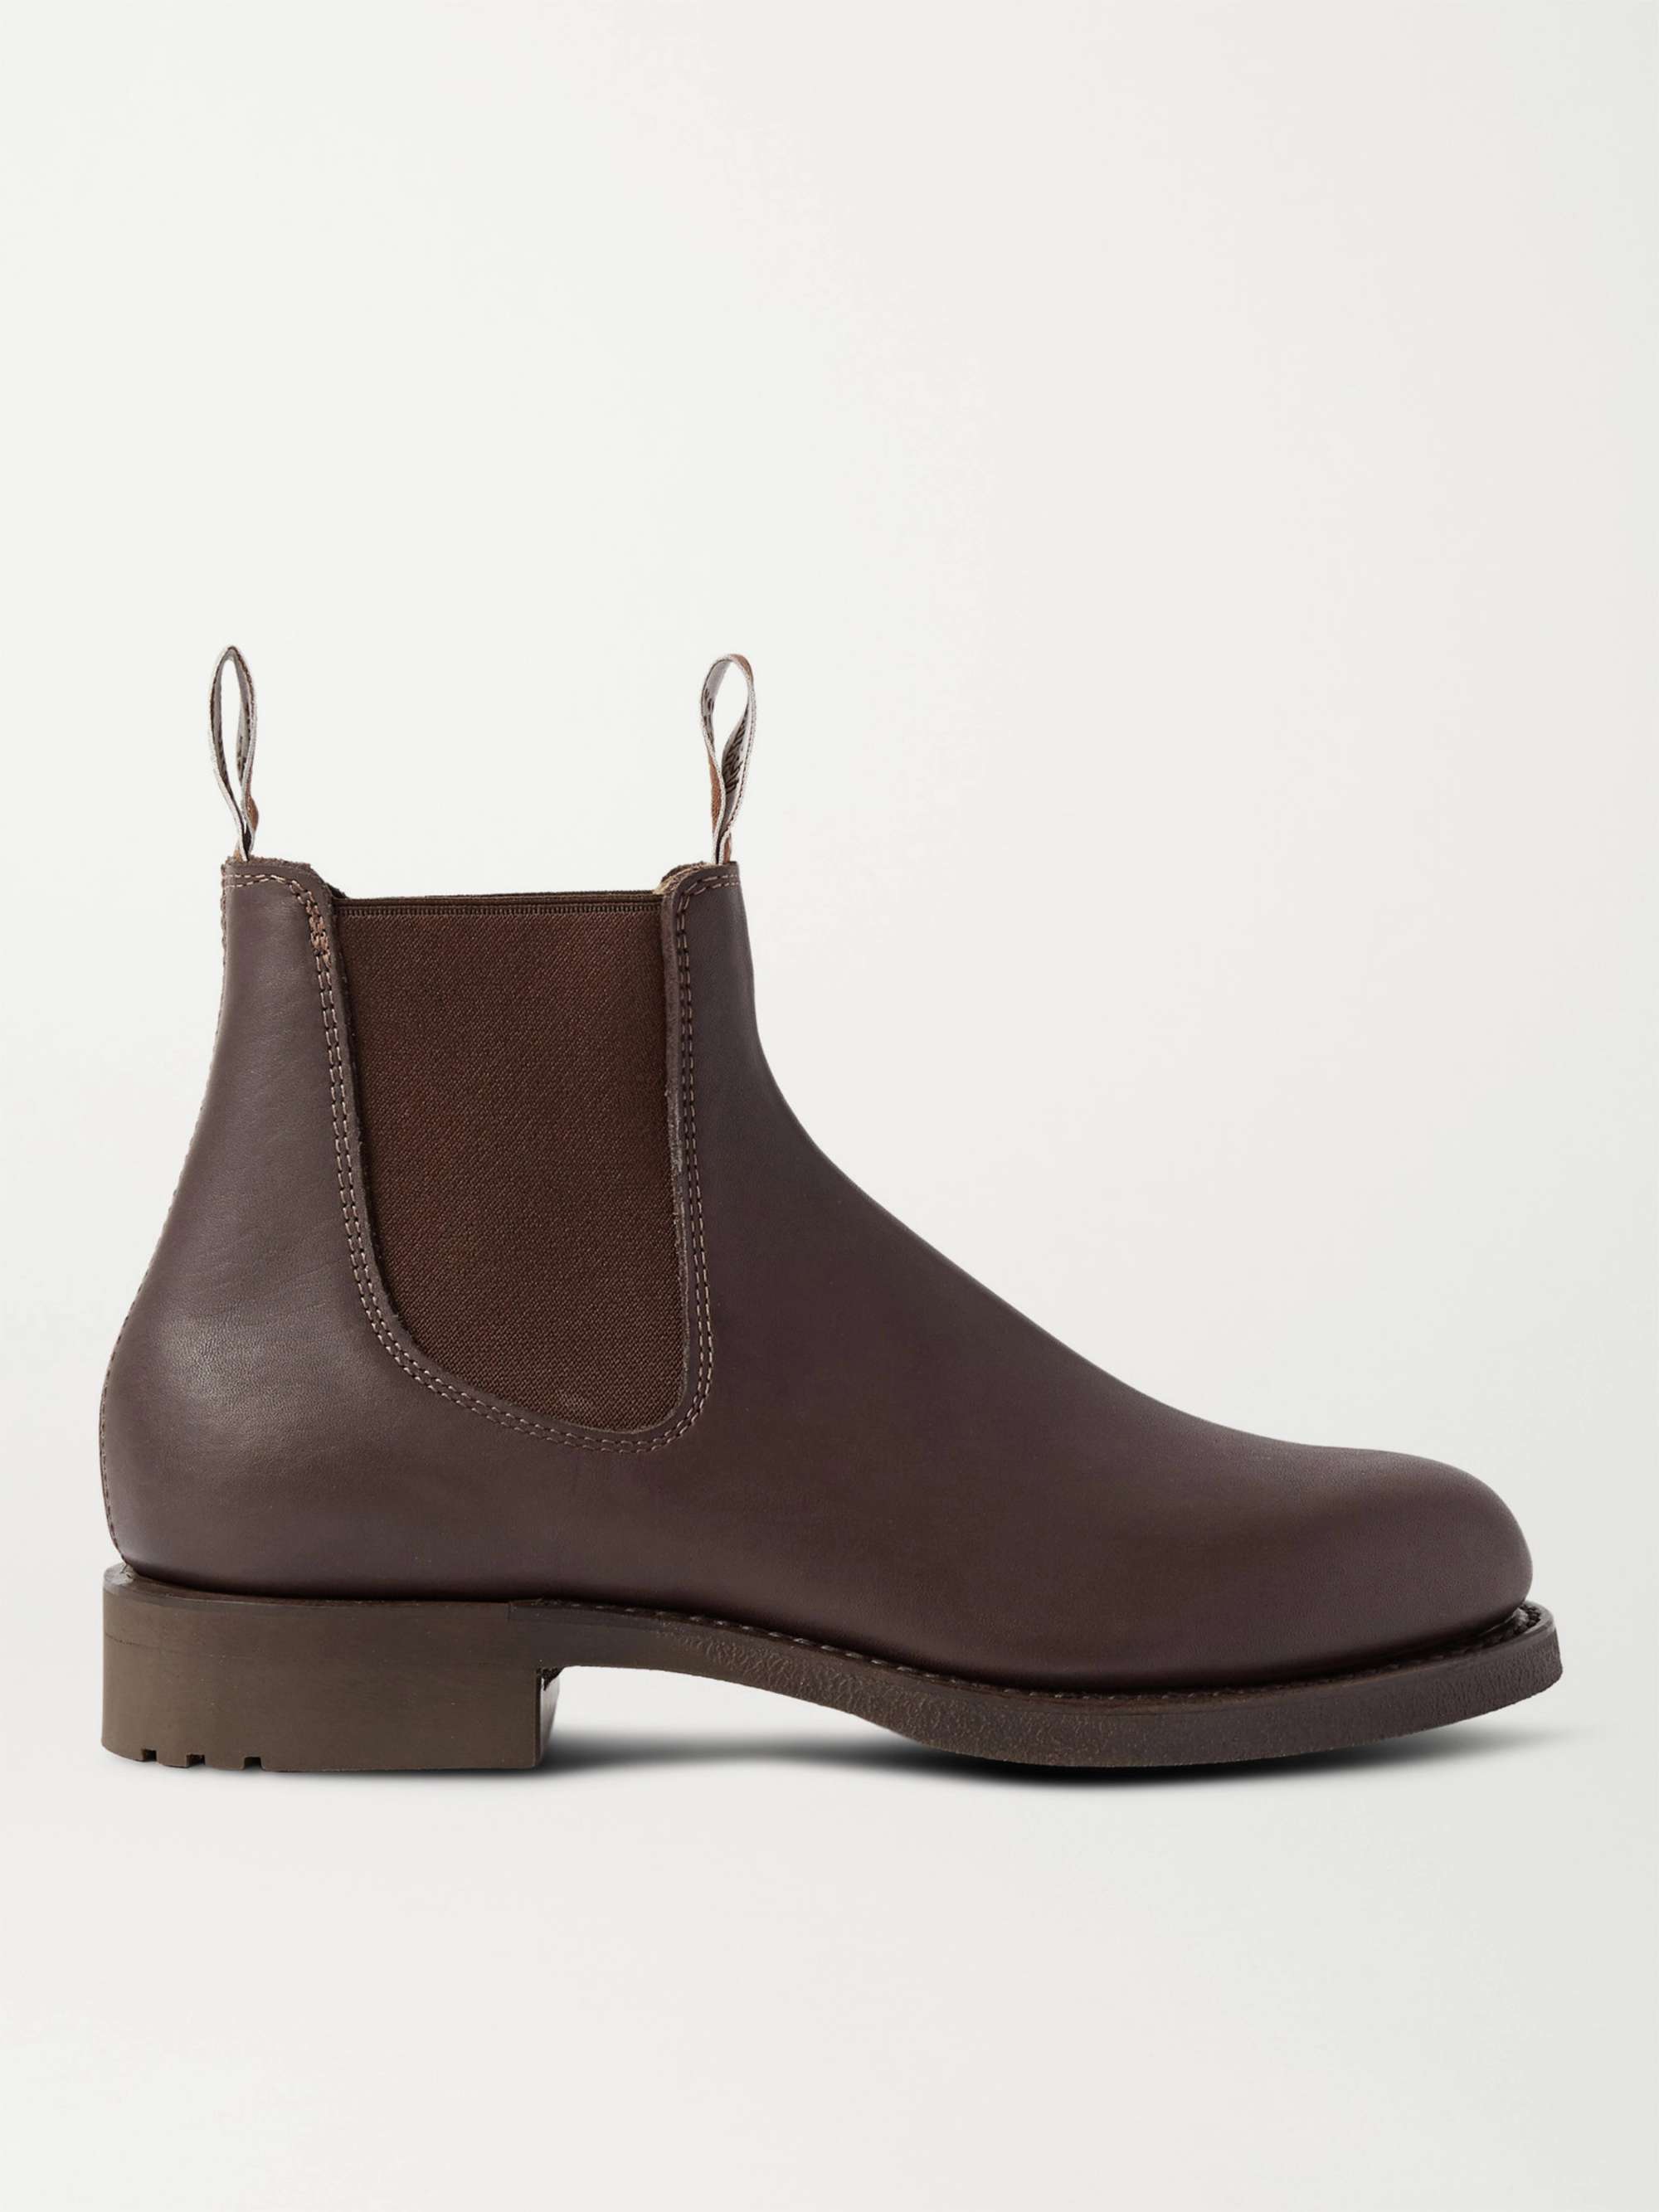 R.M.WILLIAMS Gardener Whole-Cut Leather Chelsea Boots | MR PORTER